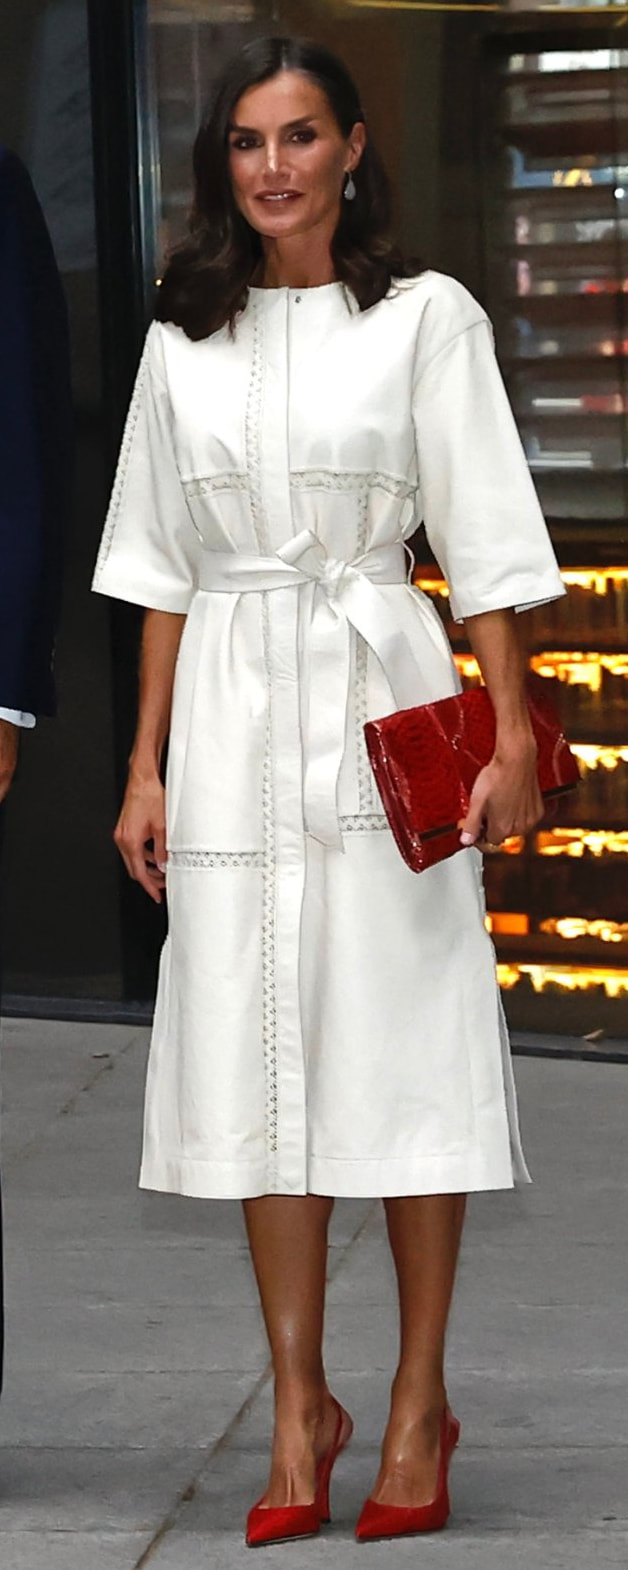 Massimo Dutti Embroidered Nappa Leather Dress in Cream​ as seen on Queen Letizia.